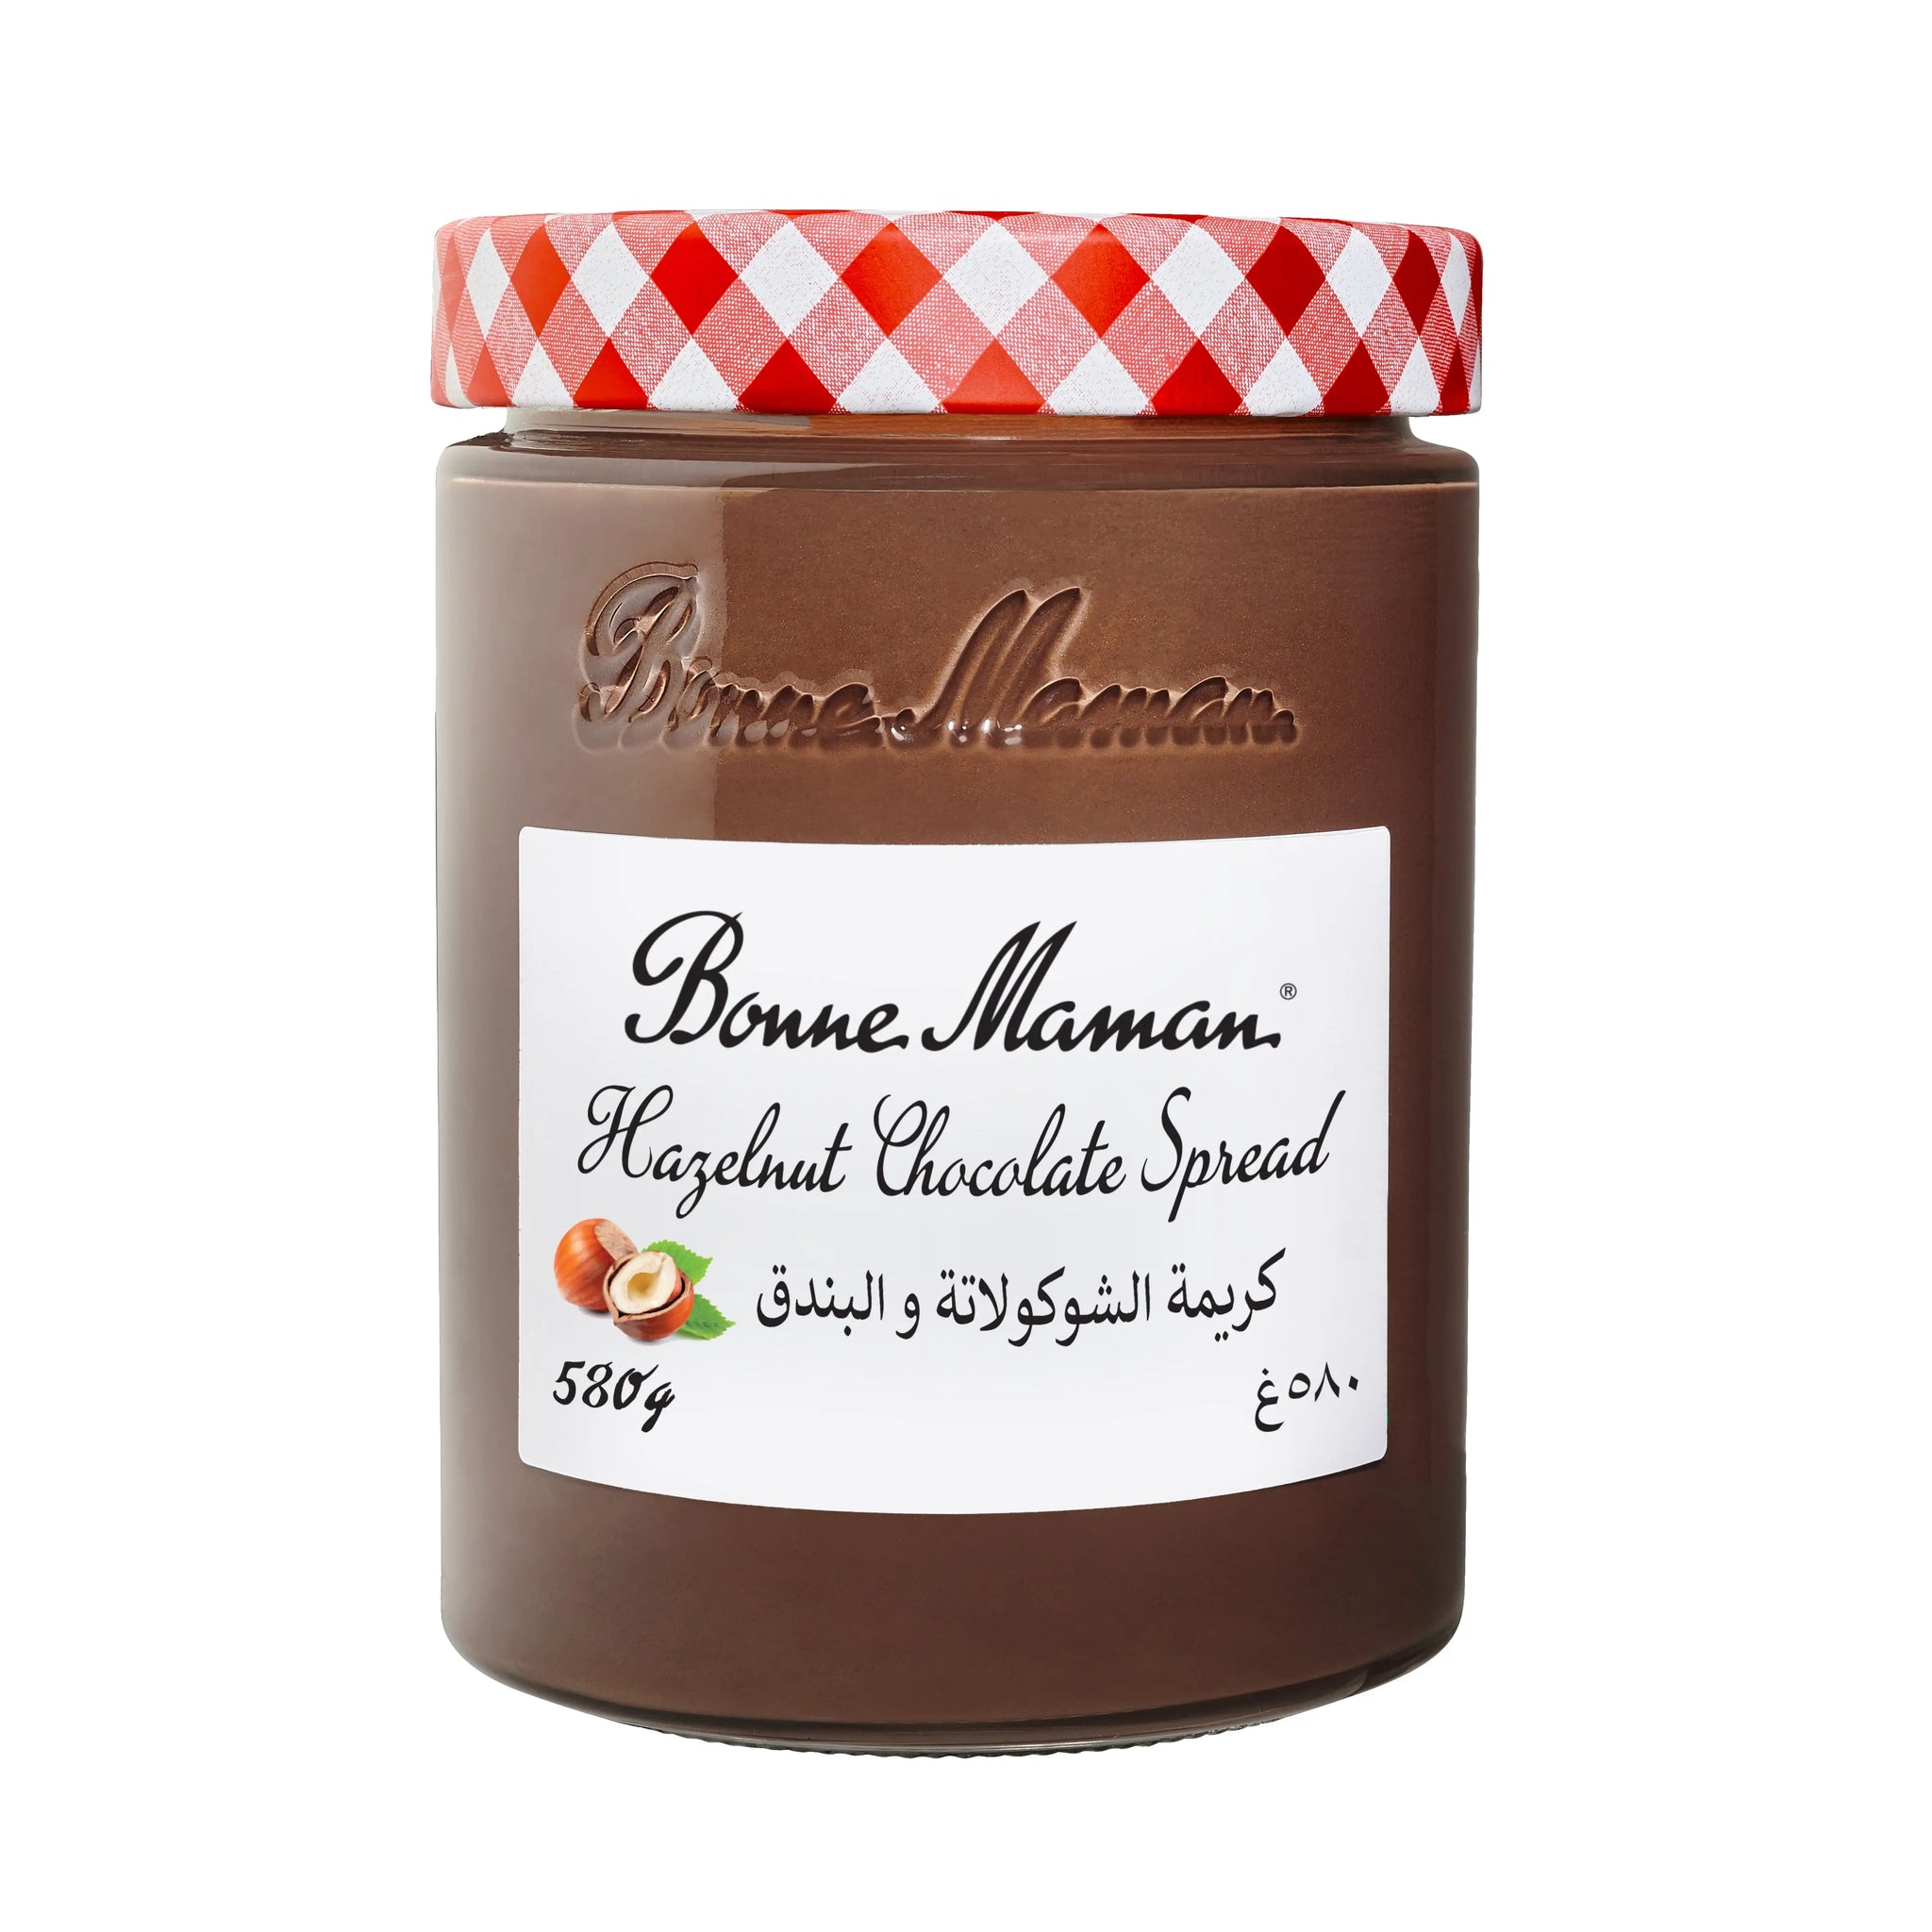 Bonne Maman debuts hazelnut chocolate spread